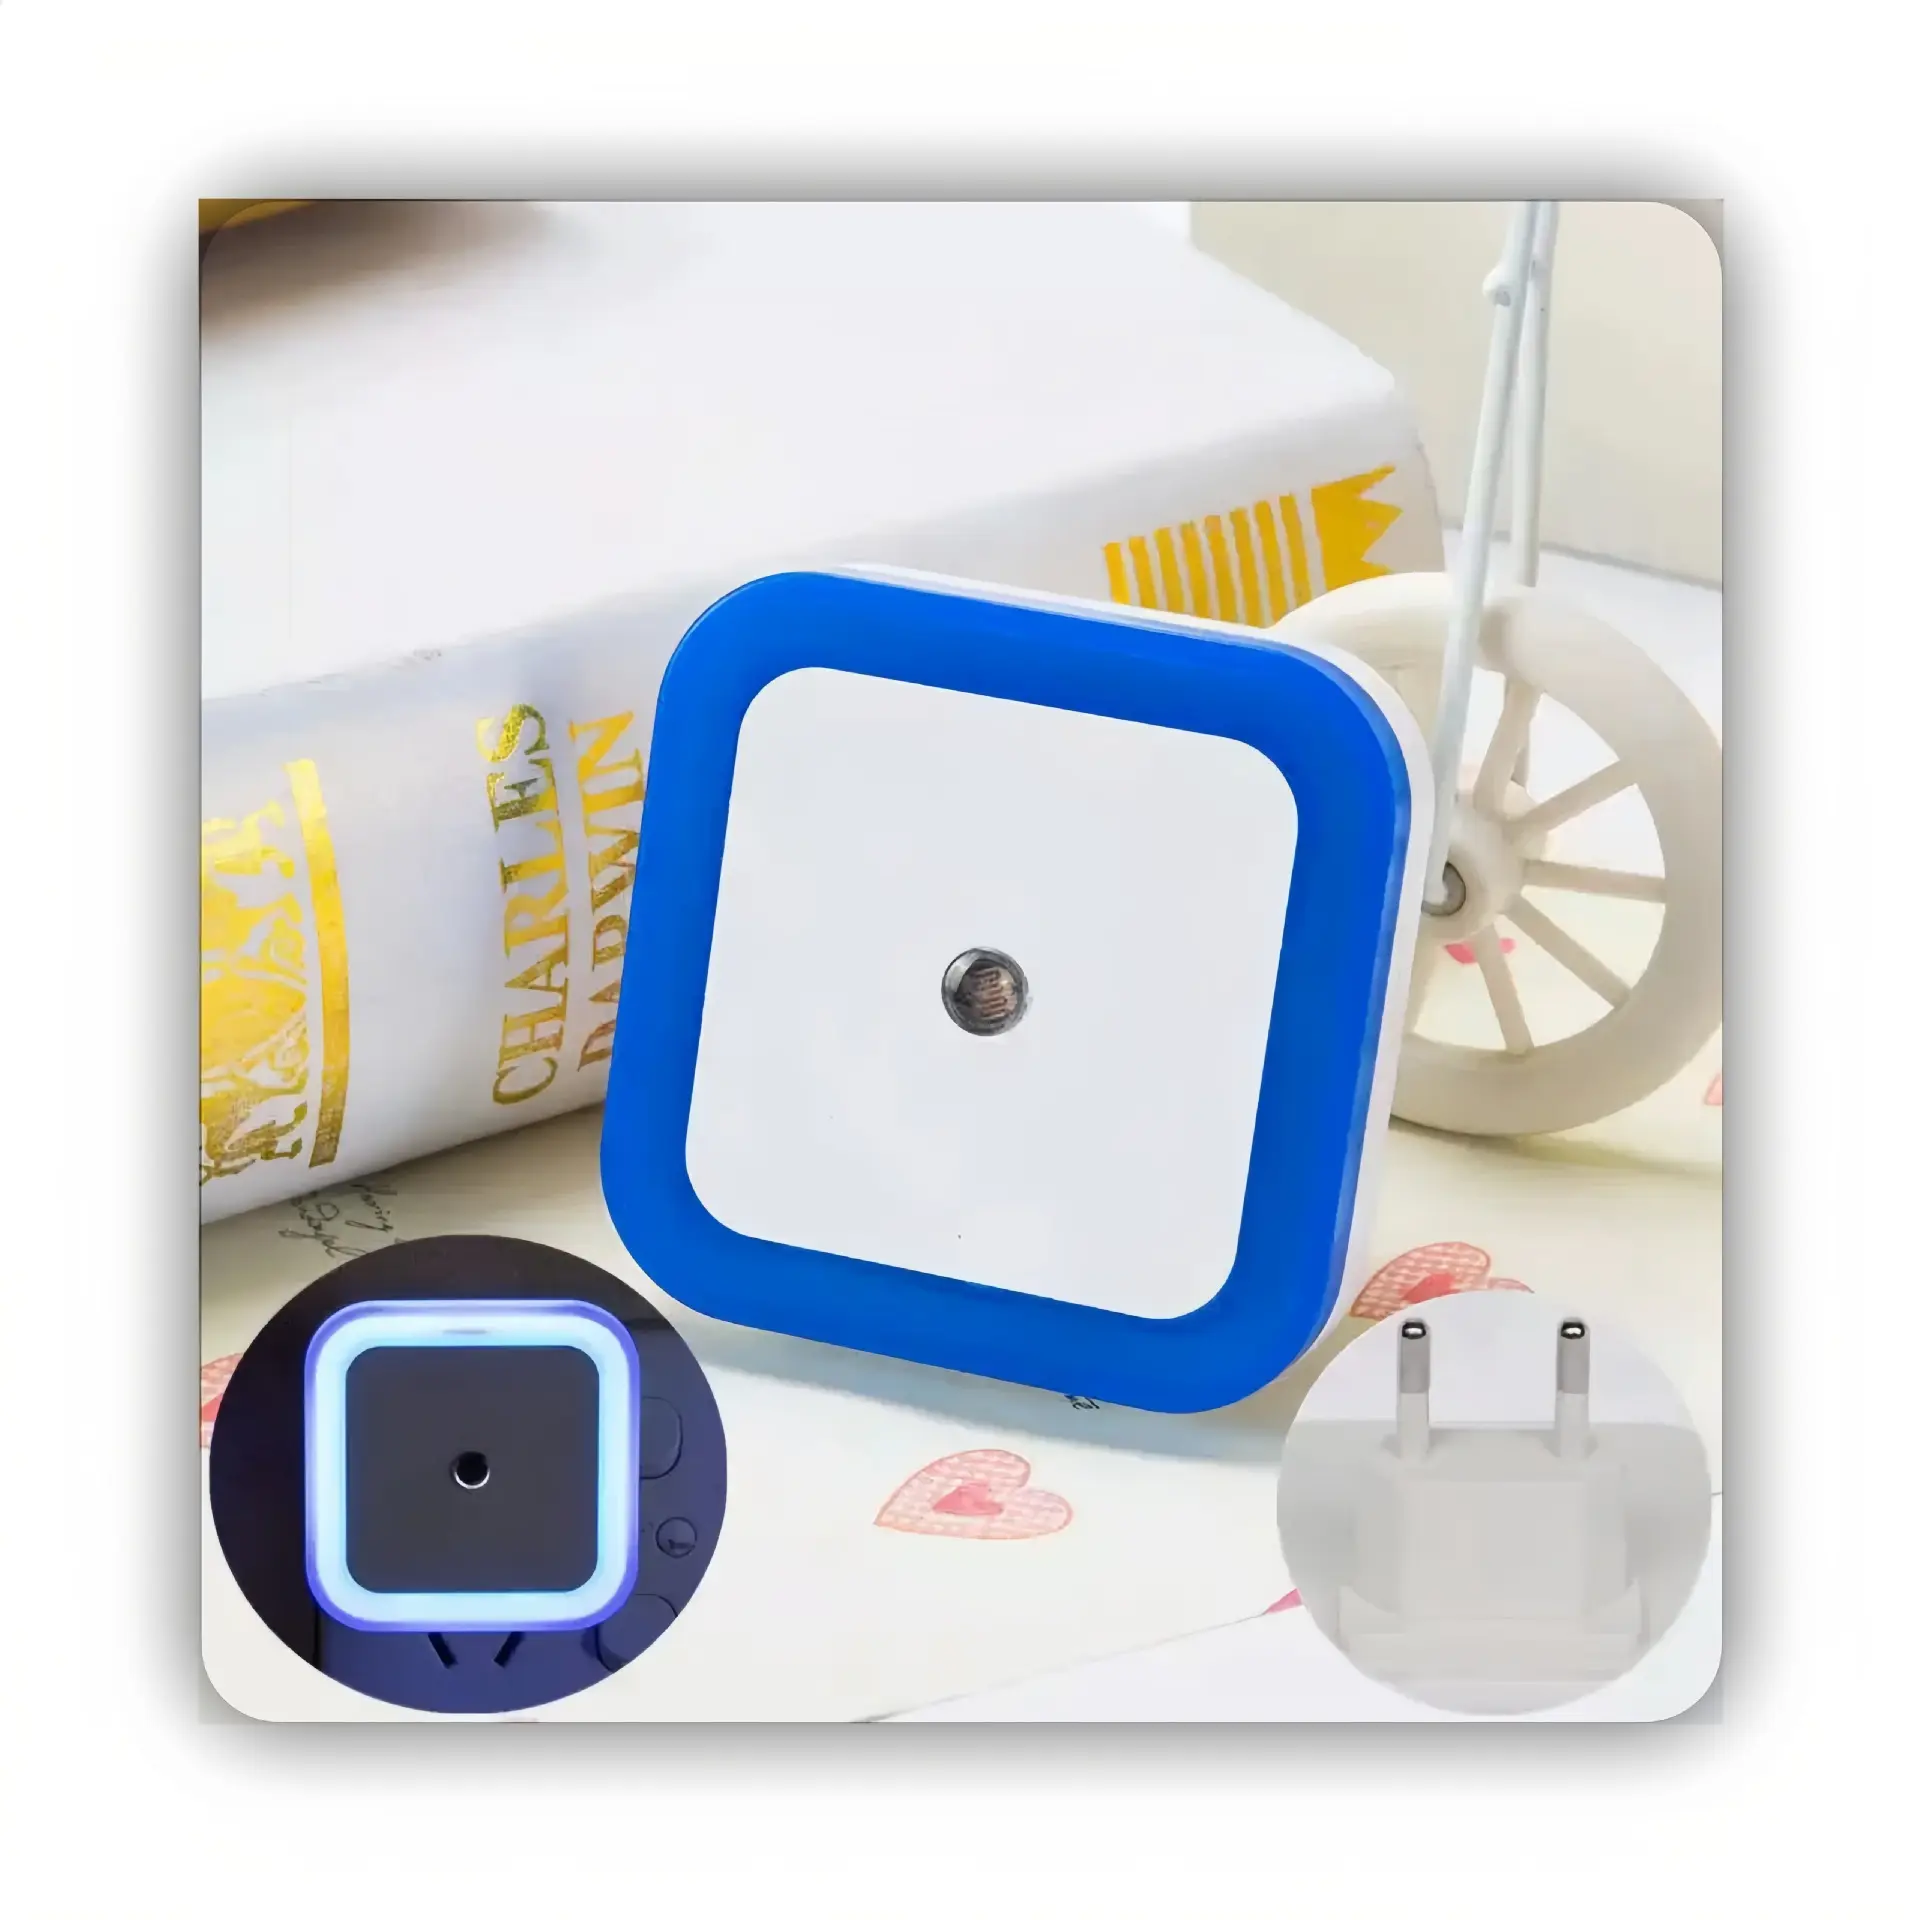 Wall Night Lamp Light Sensor Control Induction Energy Saving Sleeping Night Light 110V-220V For Baby Room Bedroom Corridors